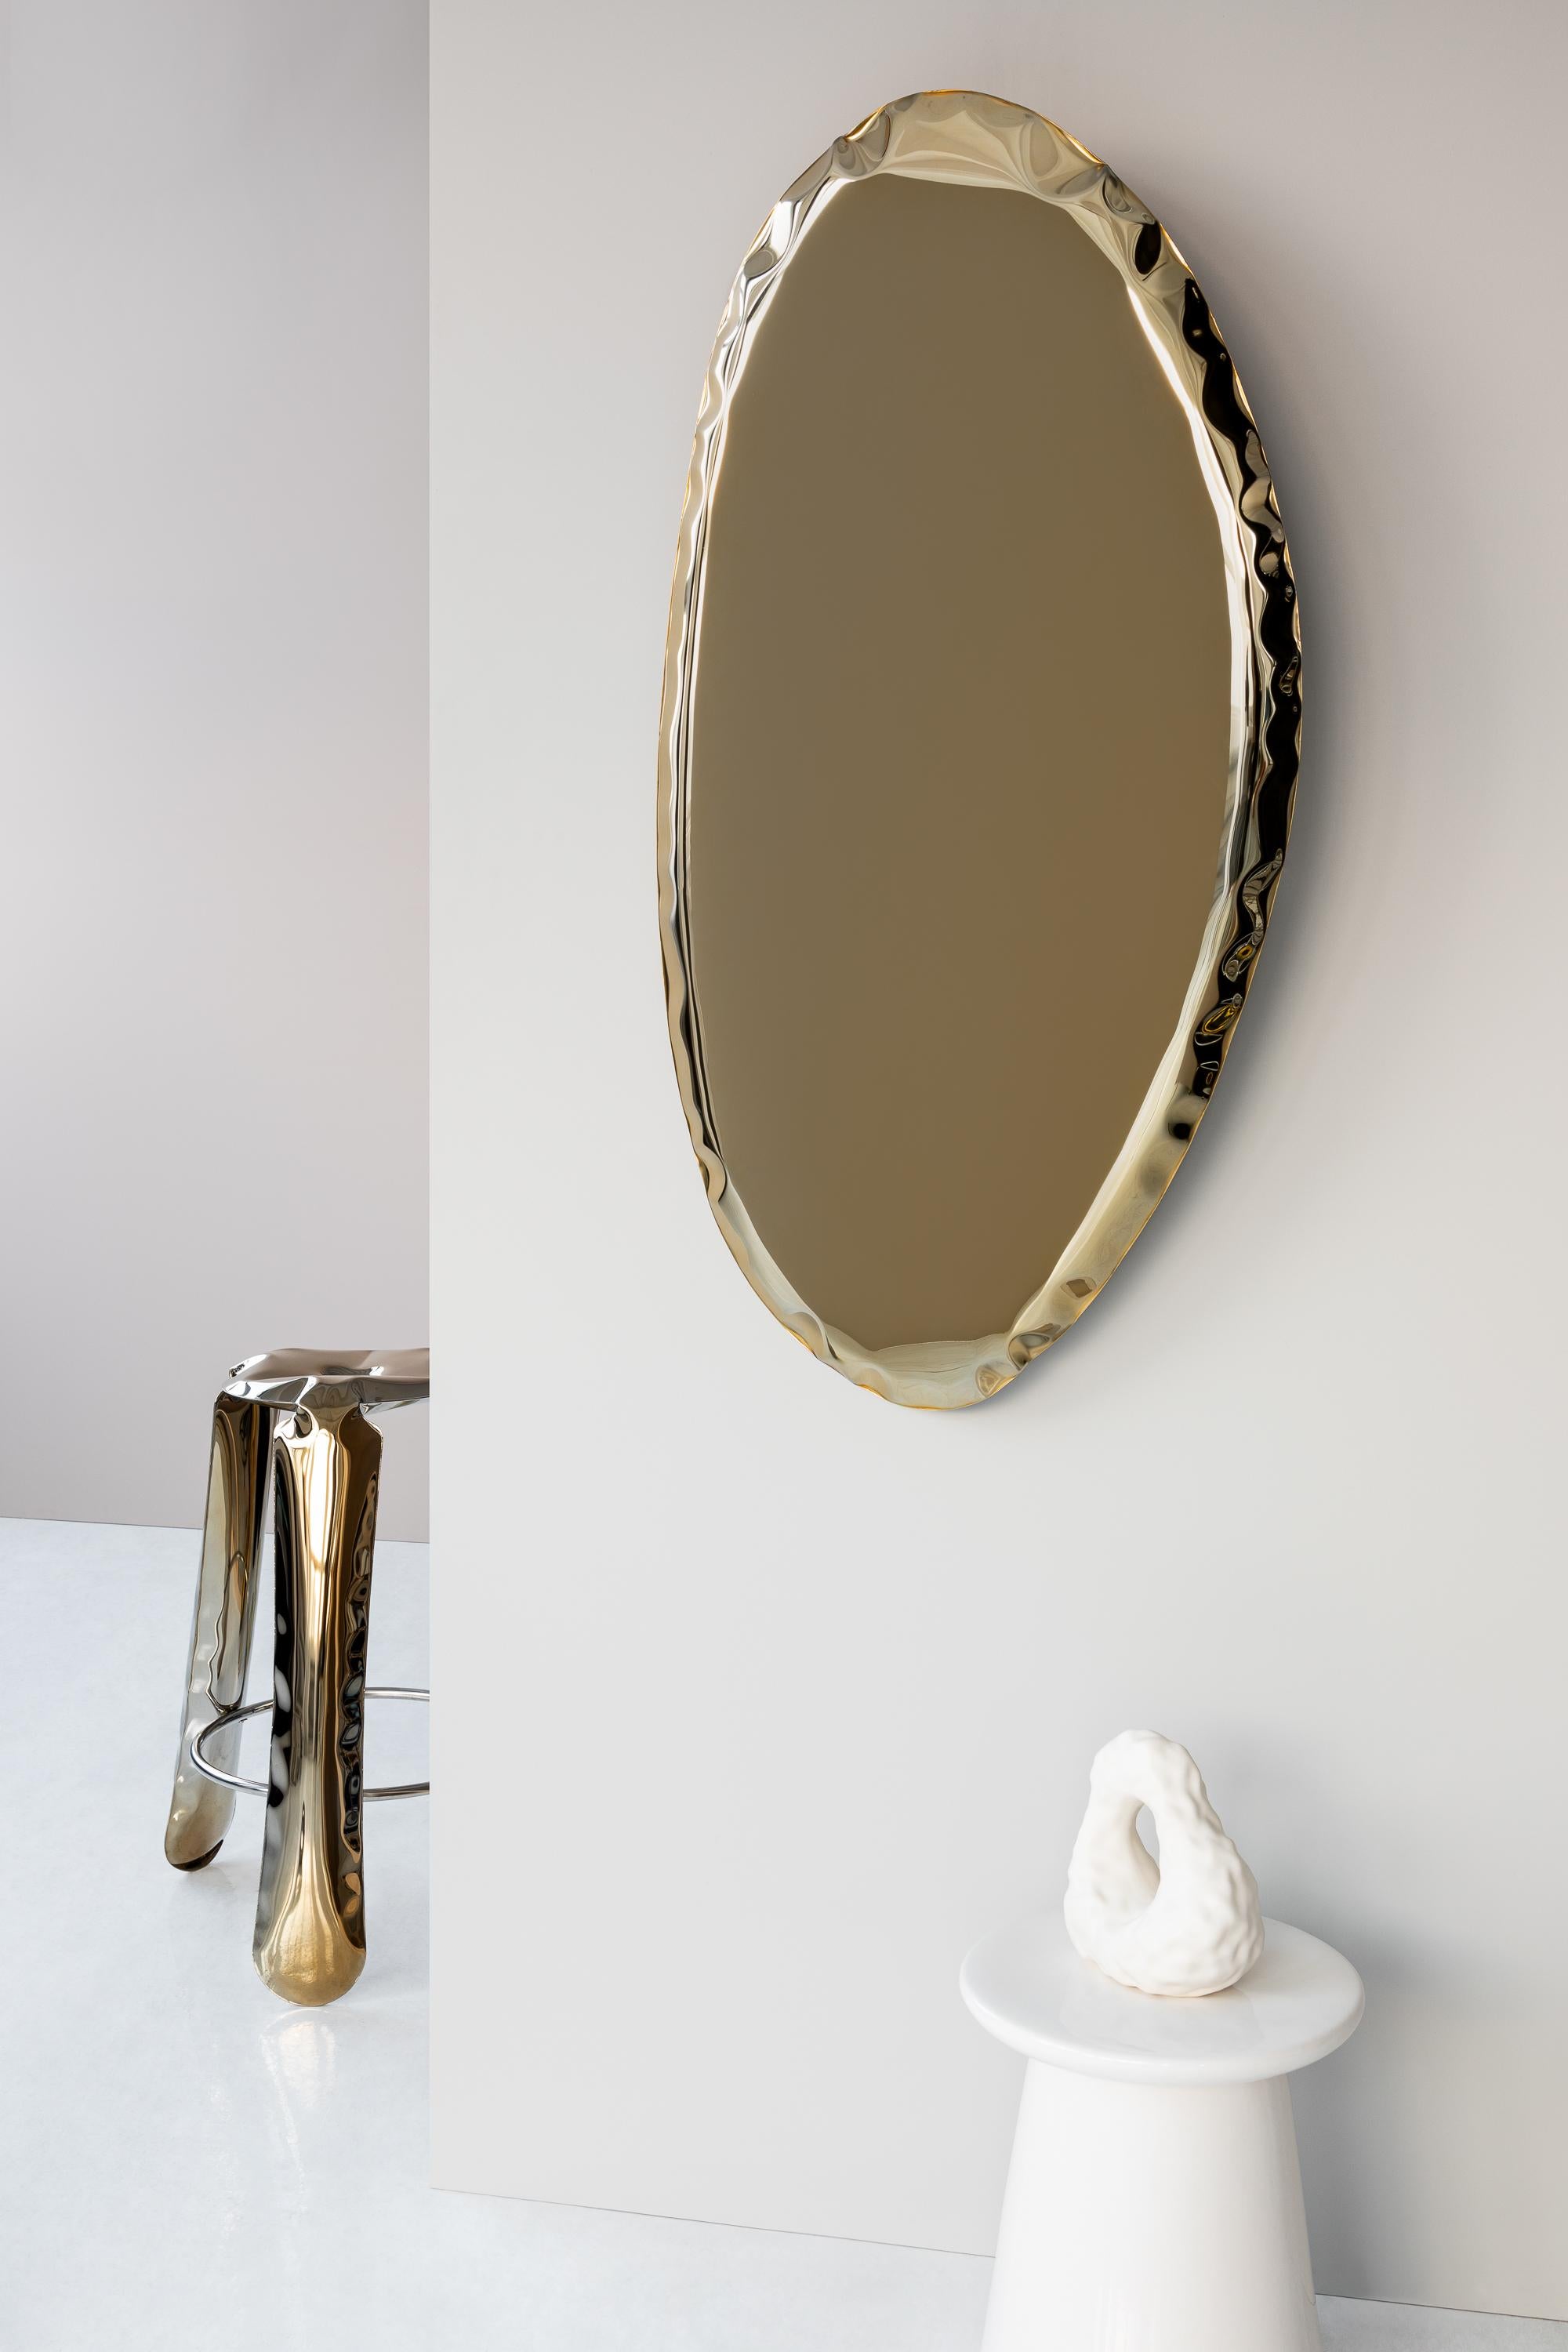 Polish Classic Gold Tafla O4.5 Wall Mirror by Zieta For Sale